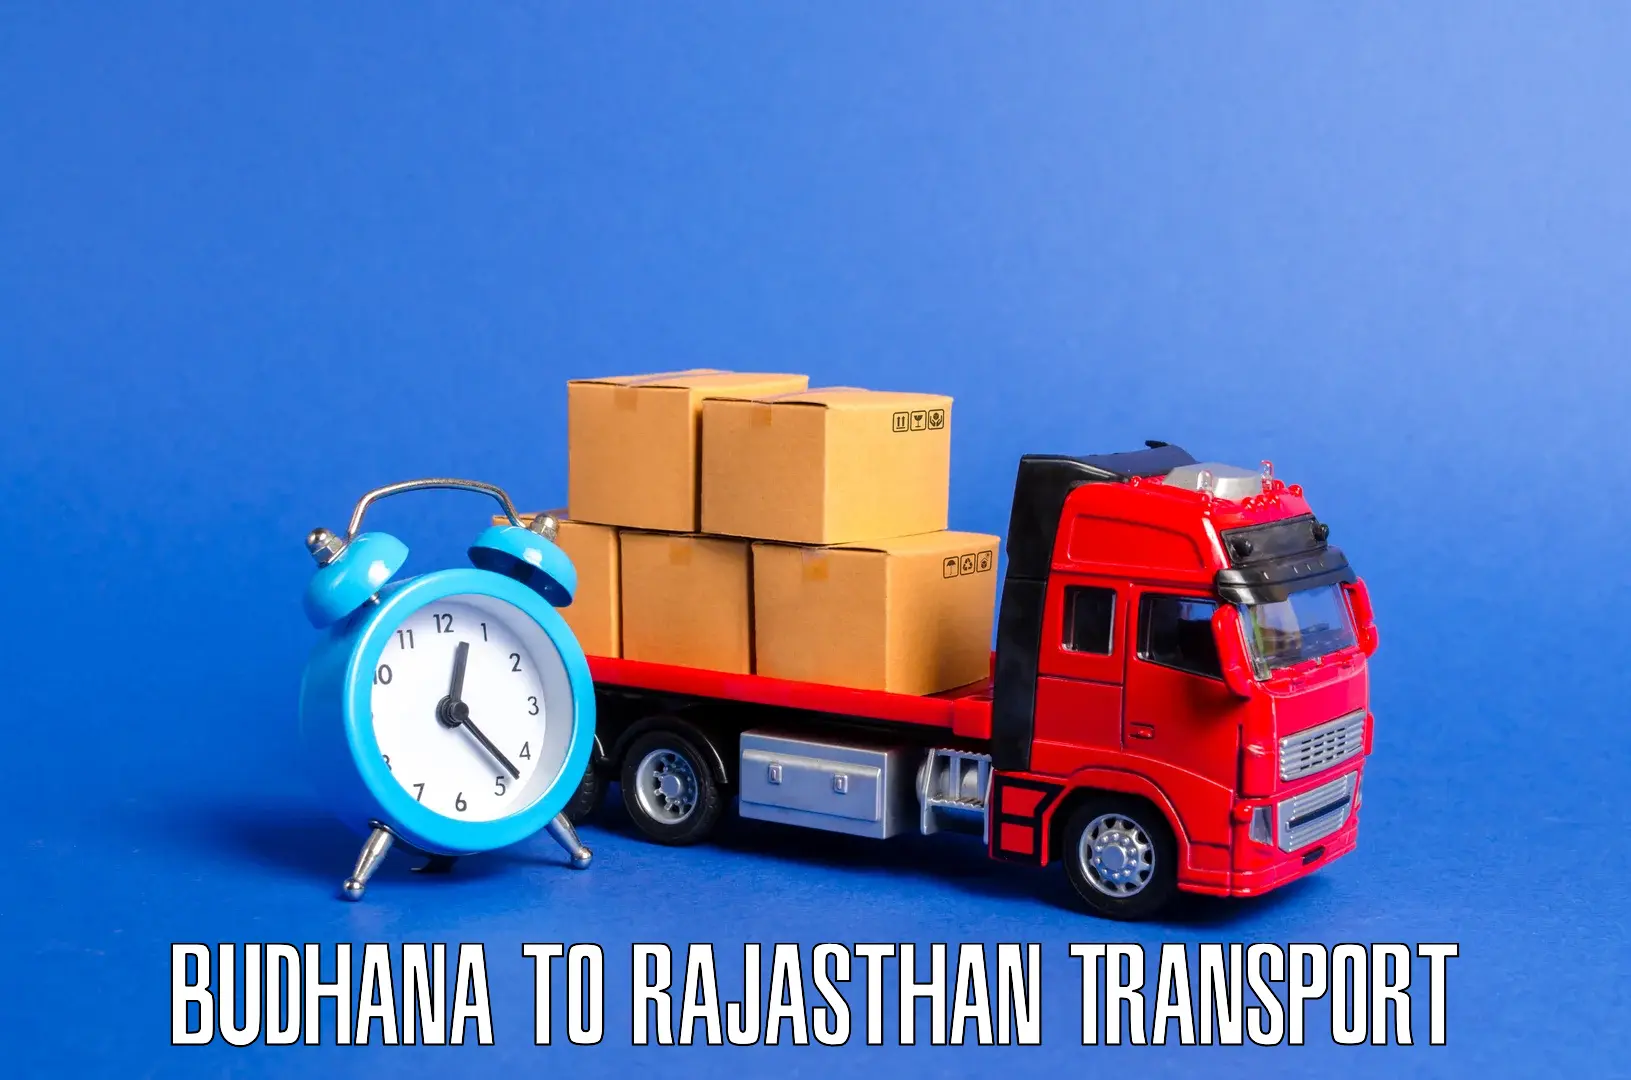 Lorry transport service in Budhana to Jodhpur